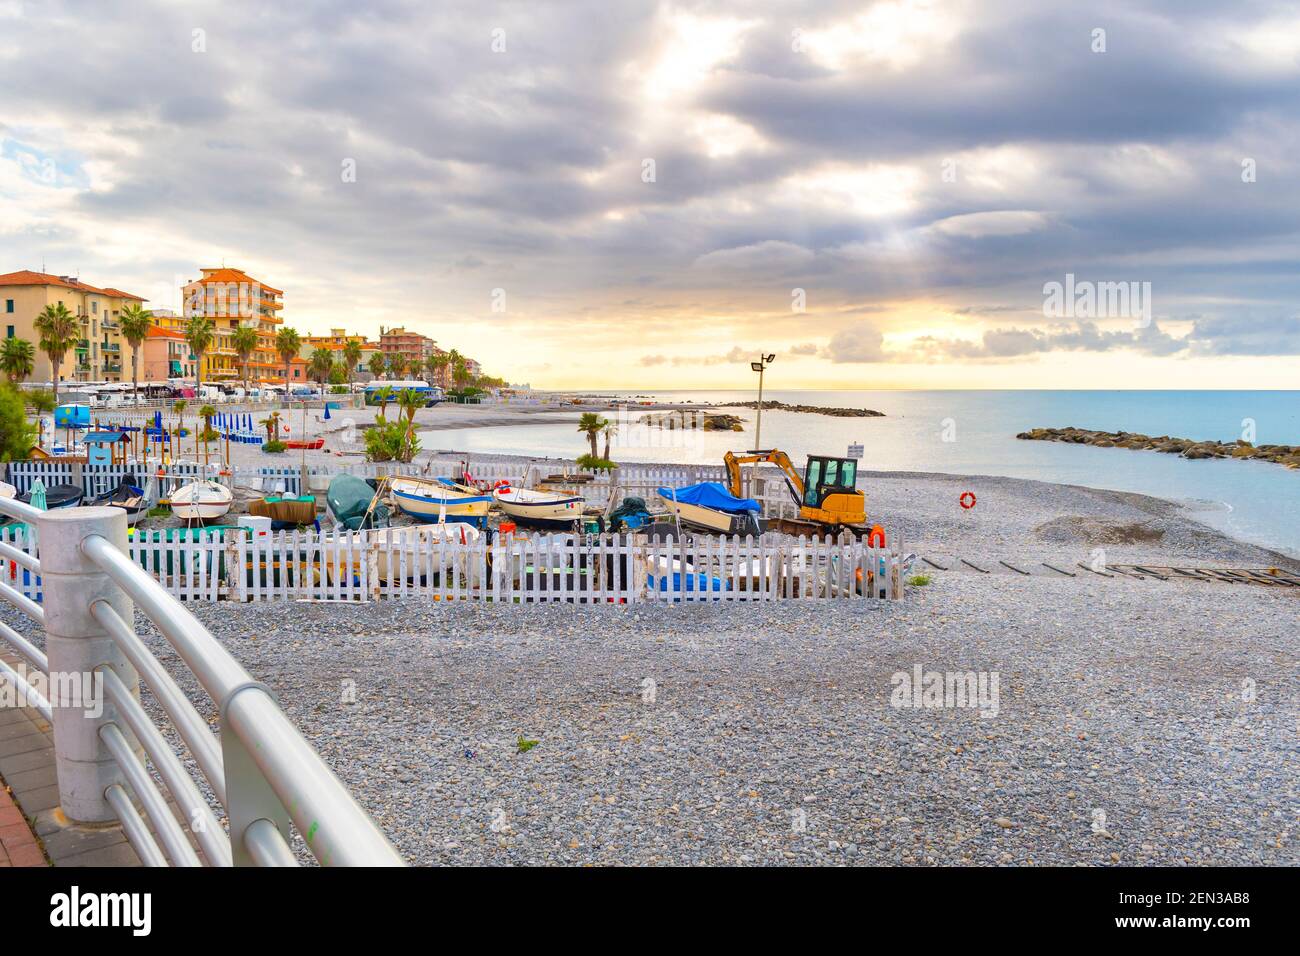 Morning sunlight along the Mediterranean Sea at the coastal resort town of Ventimiglia, Italy, on the Italian Riviera. Stock Photo